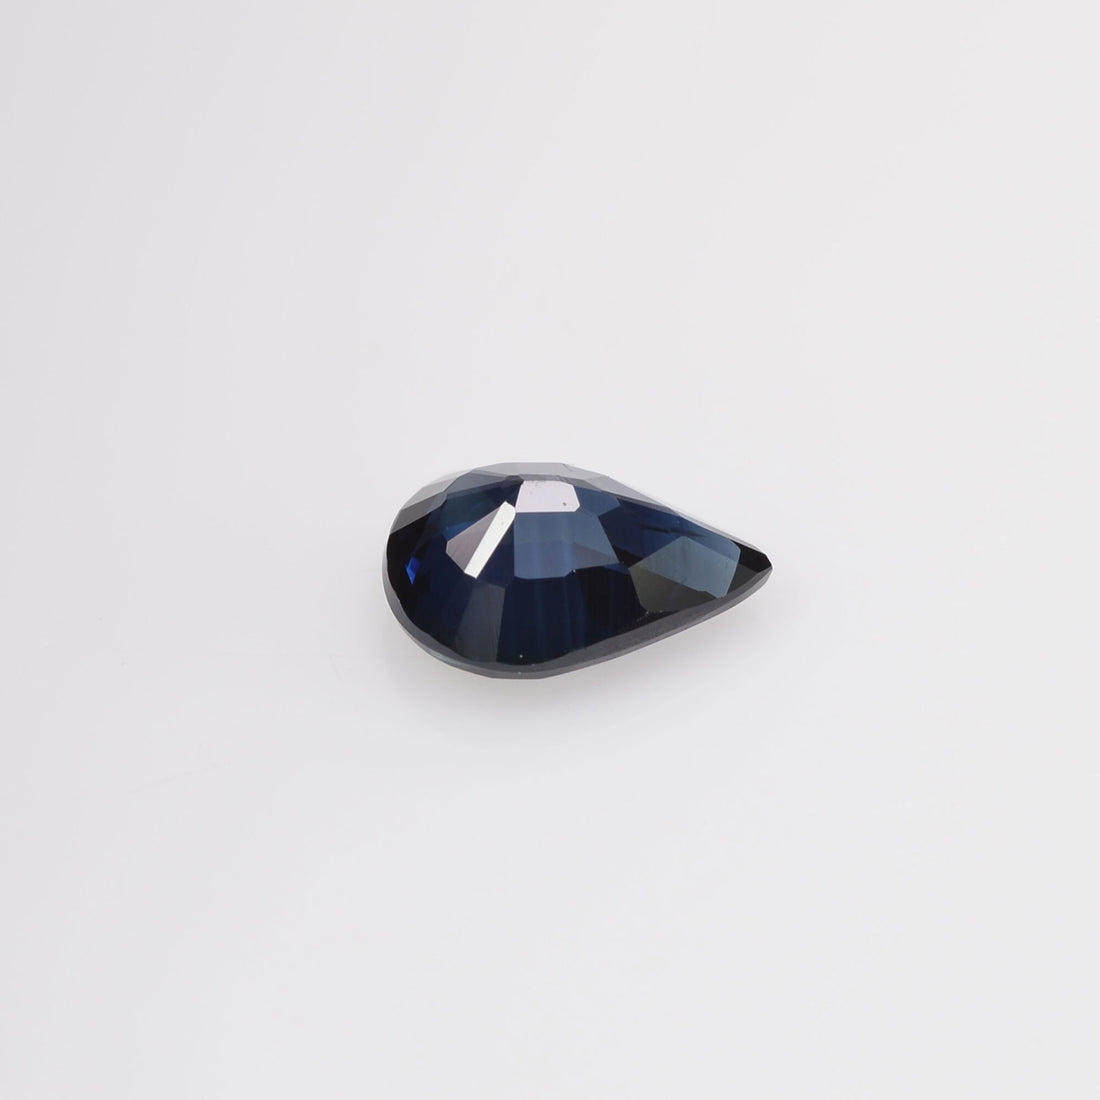 7x5 Natural Calibrated Sri Lanka Blue Sapphire Loose Gemstone Pear Cut